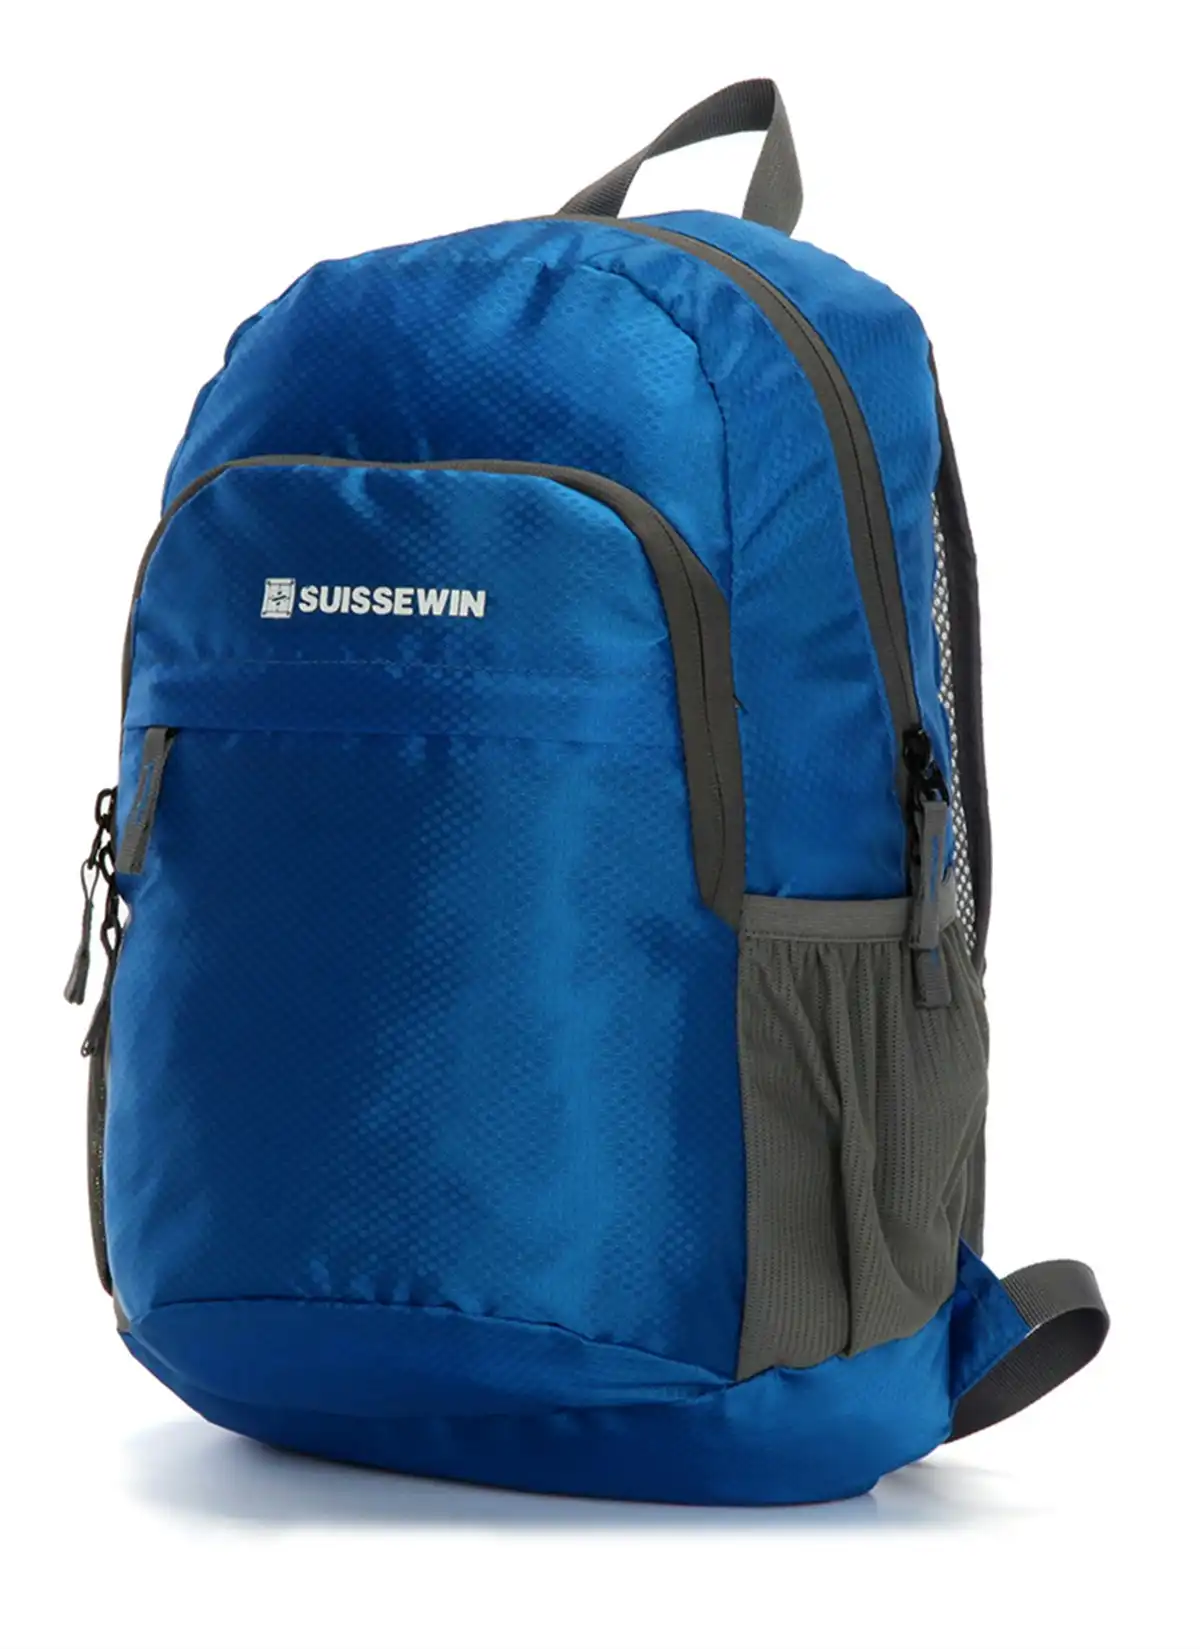 Suissewin Swiss Water-Resistant Folding Backpack Kids Travel Shoulder Bag SNK2308 Blue